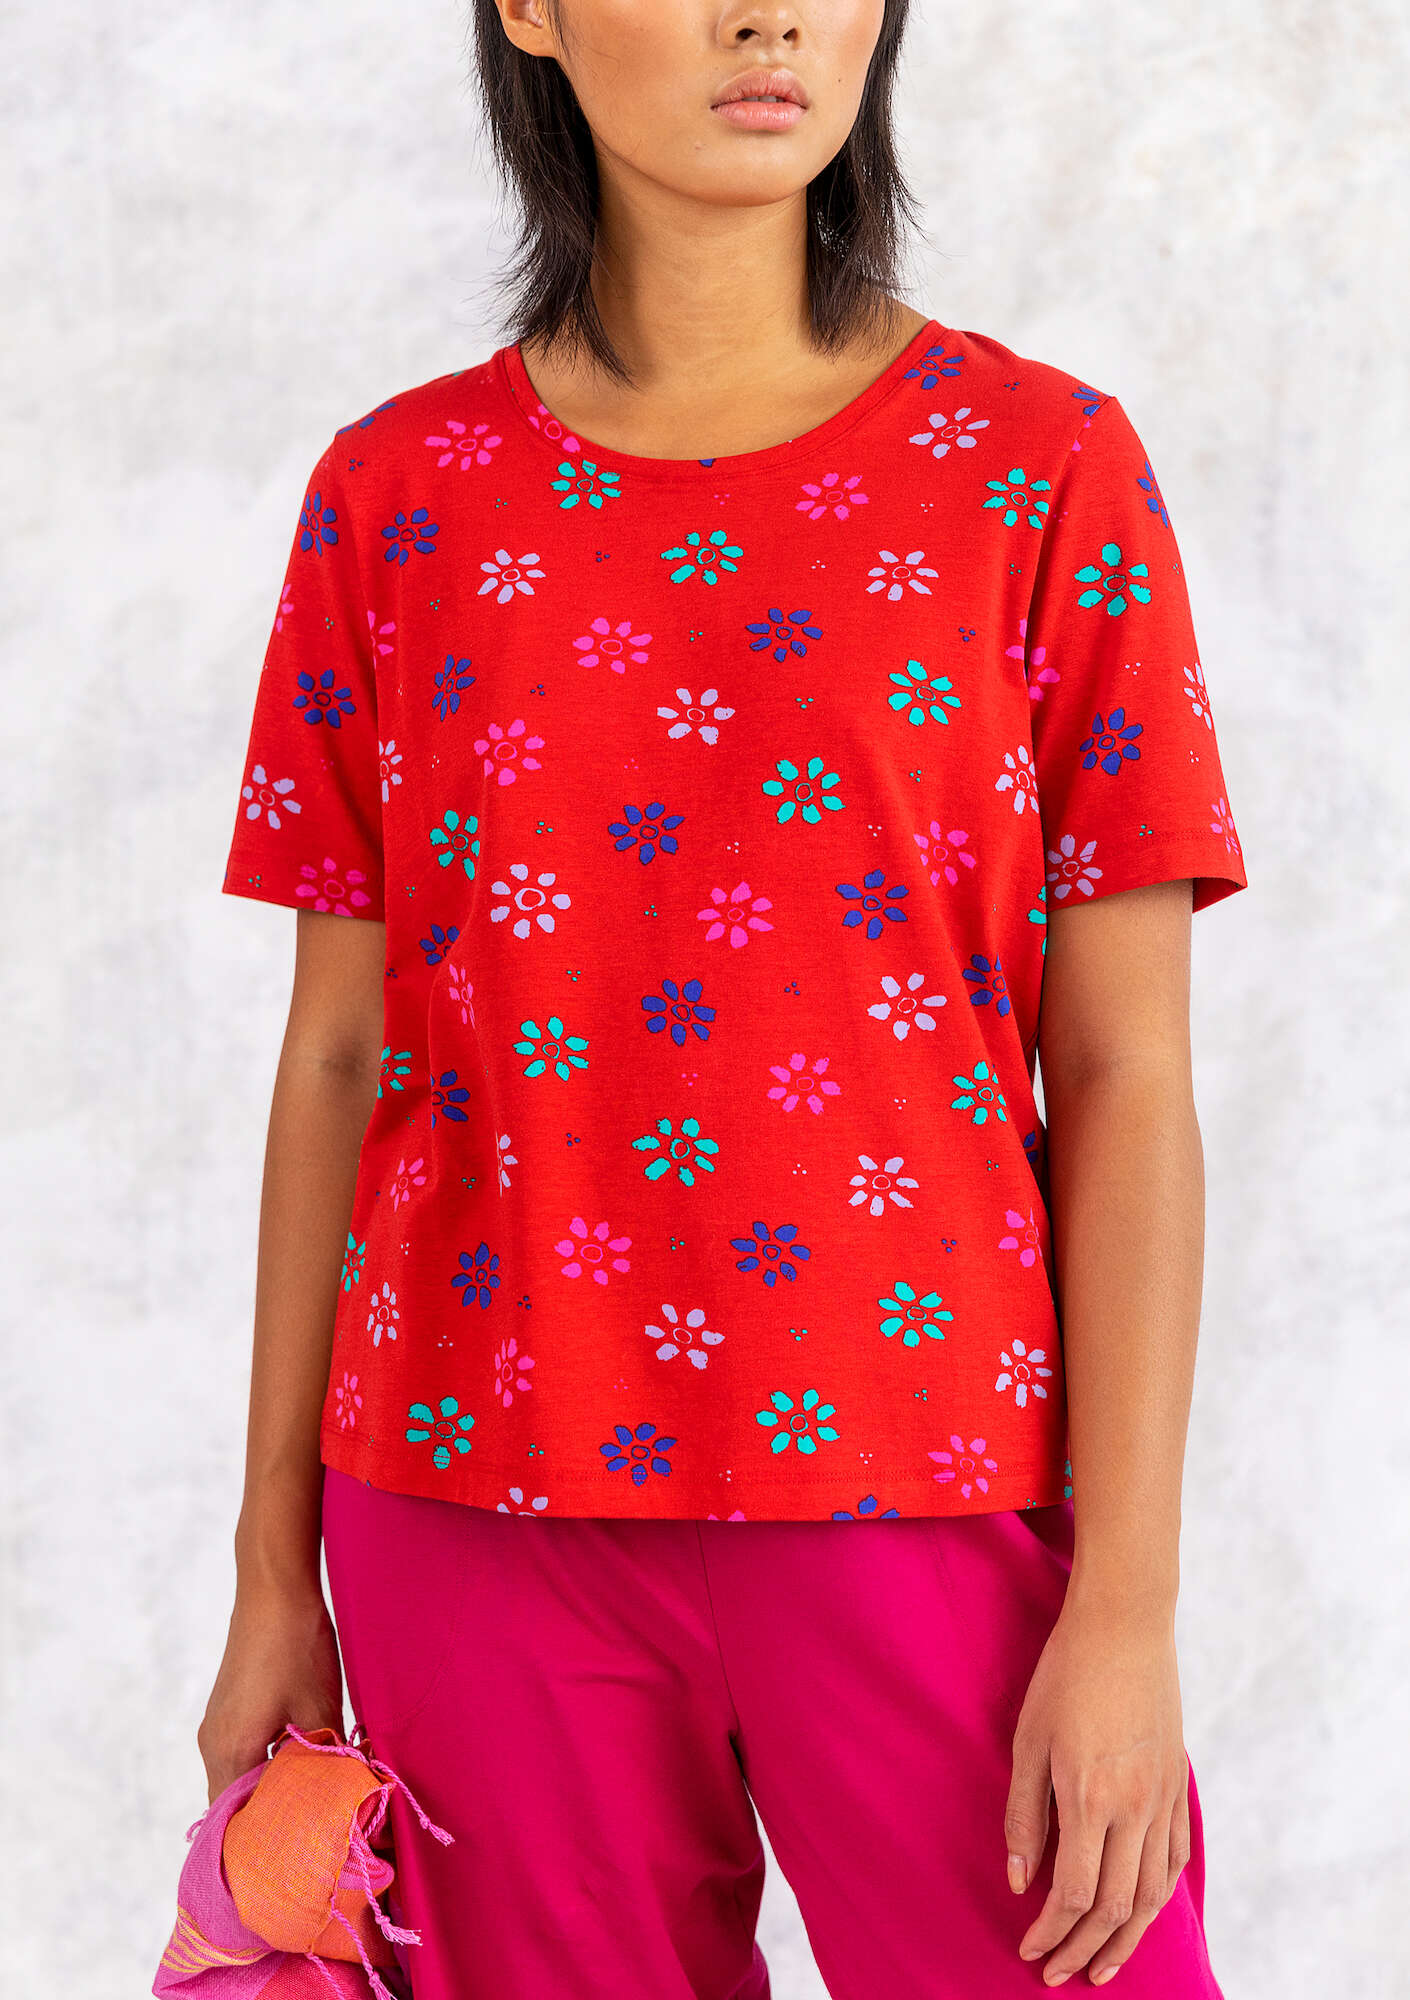 T-shirt Ester parrot red/patterned